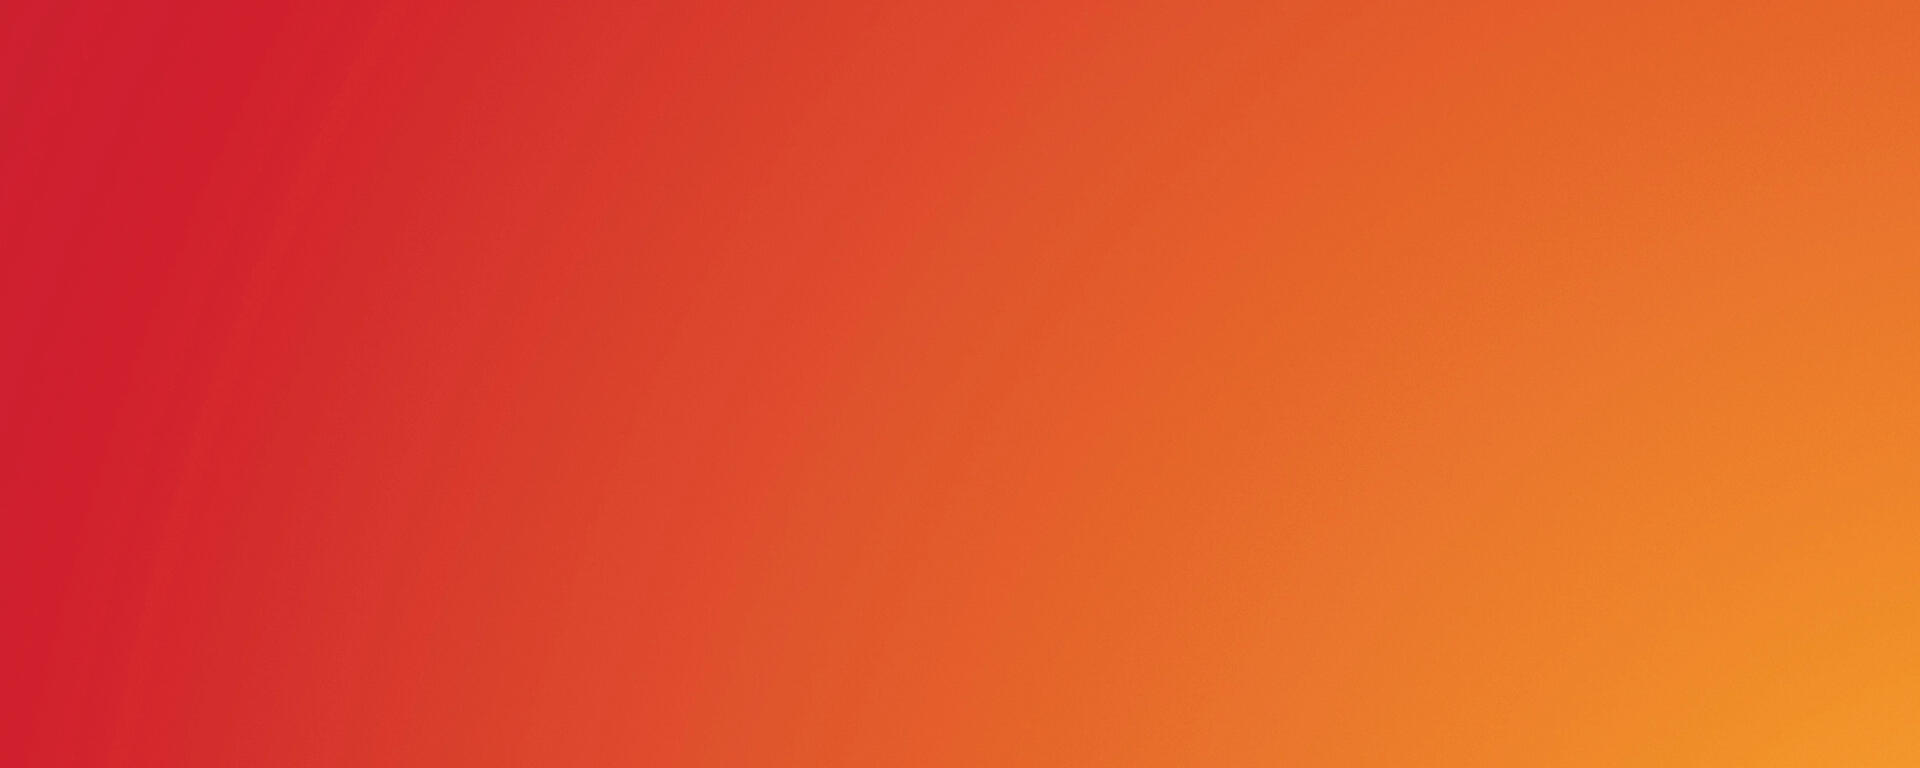 red and orange gradient background